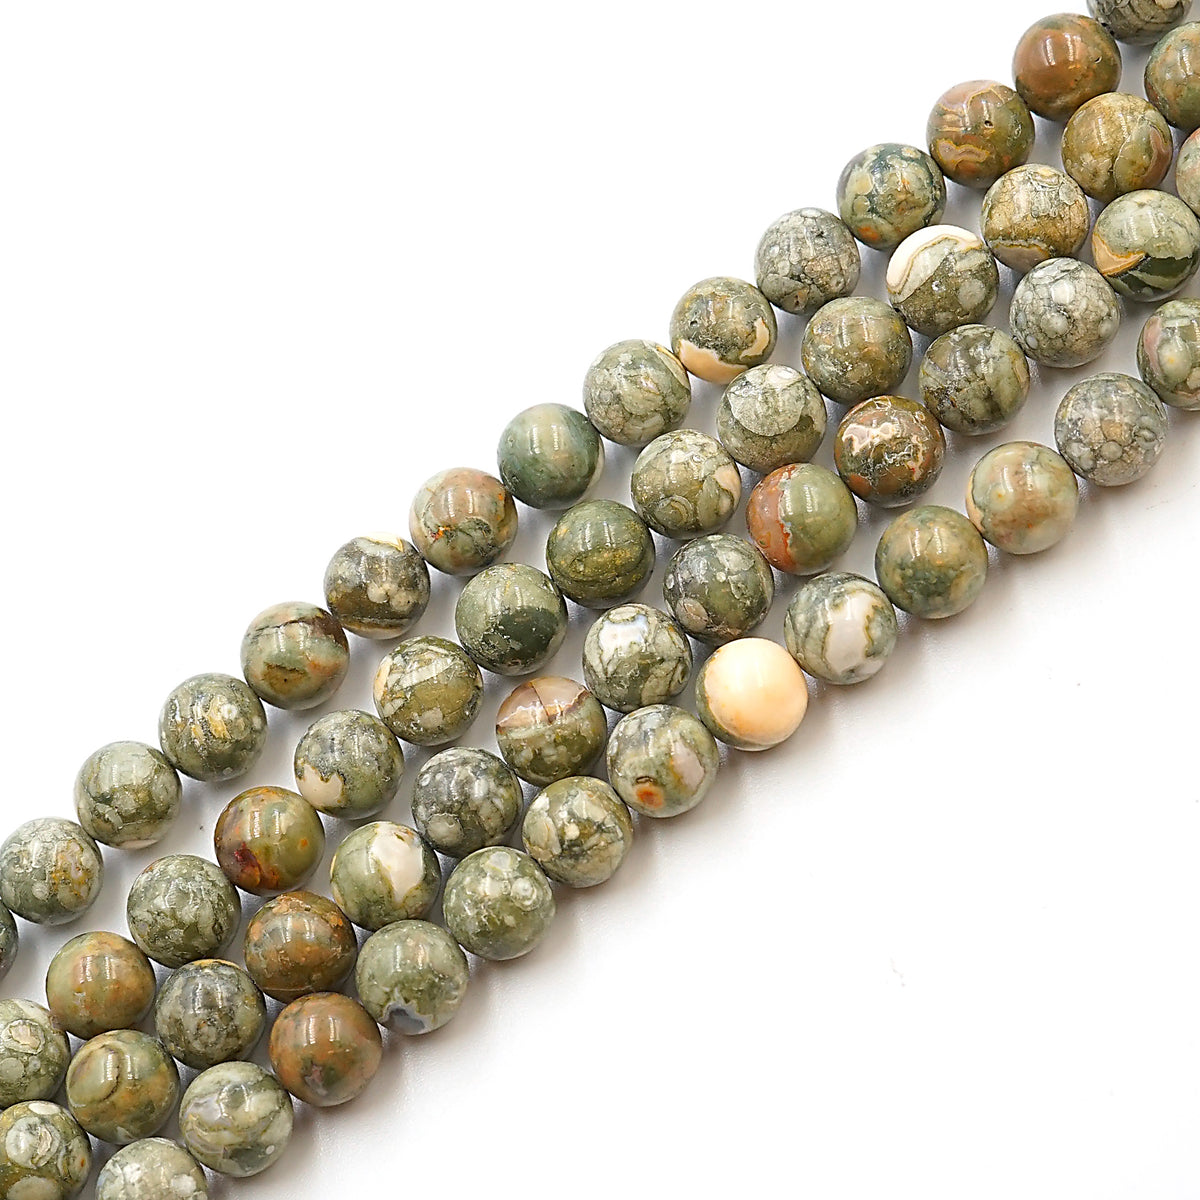 Sterling Silver with Handmade Glass Beads & Swarovski Crystal Bracelet  Selected by Love Rocks Vintage